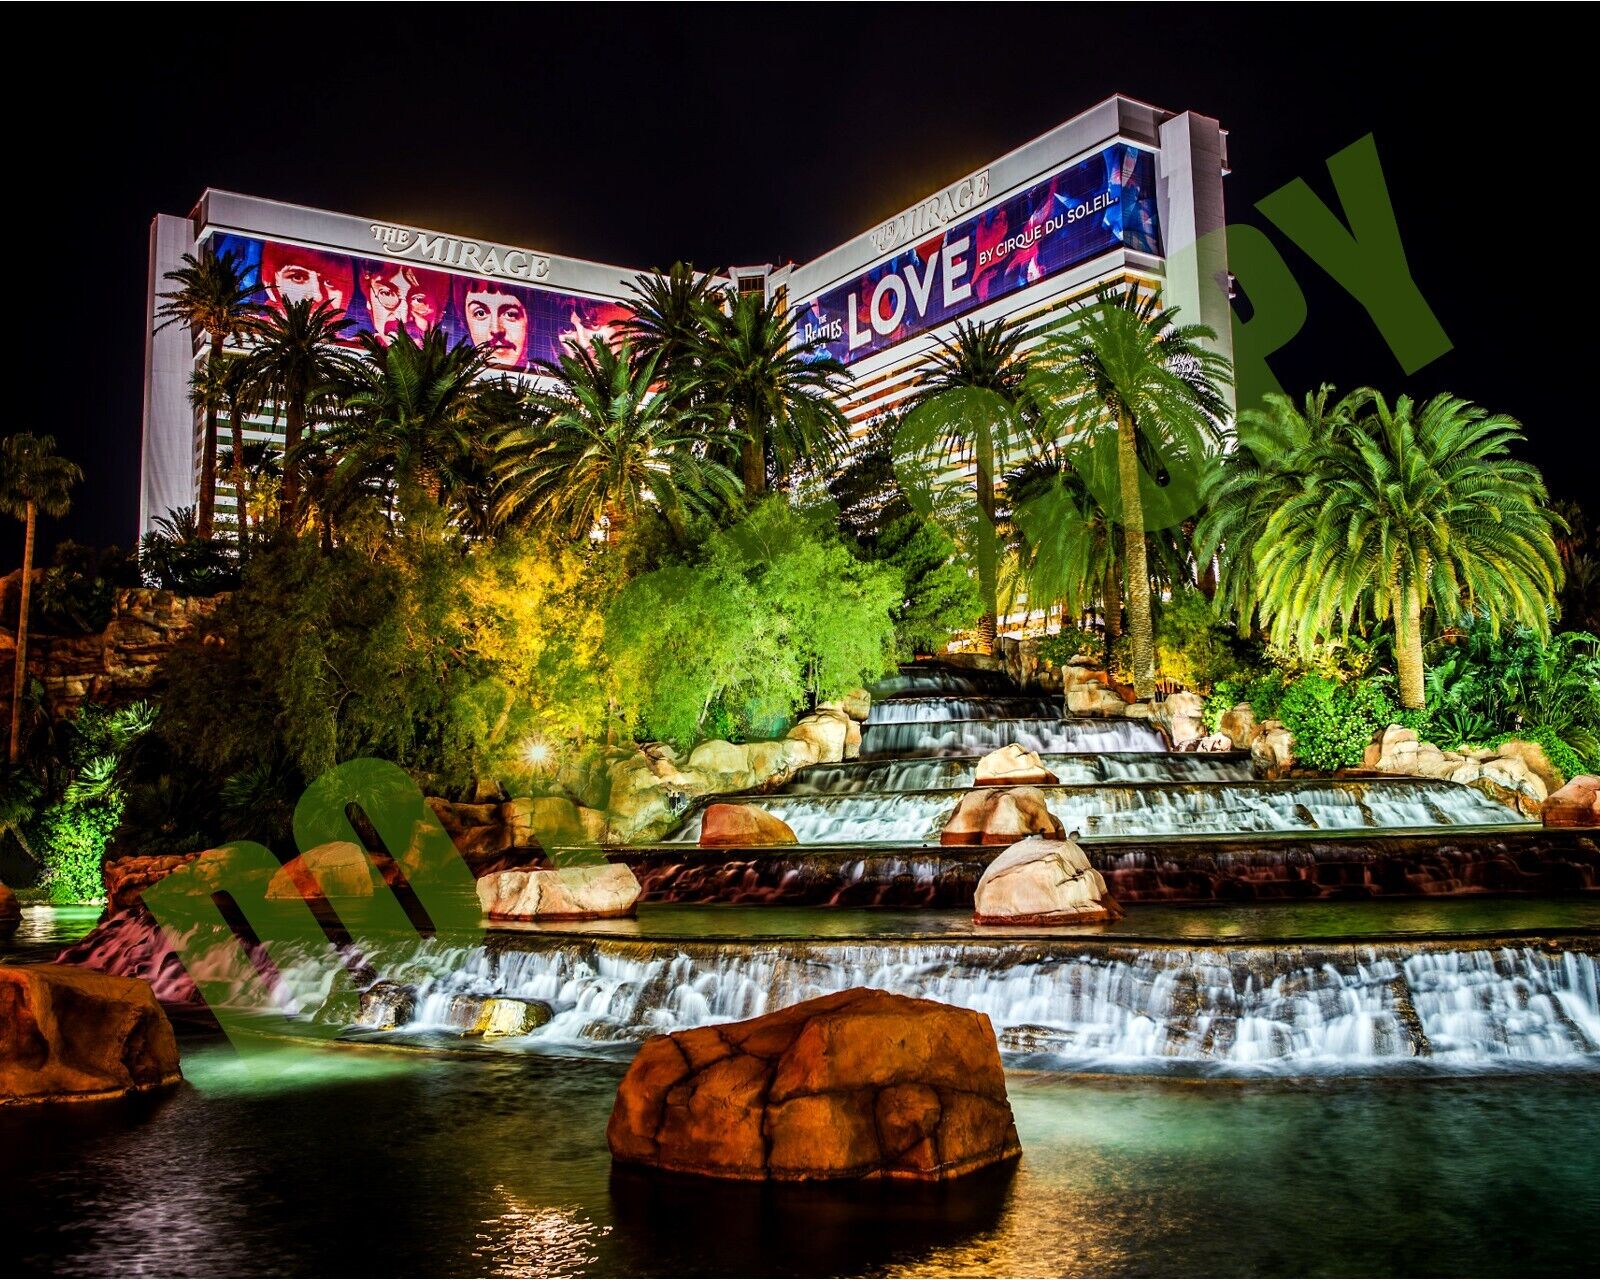 Mirage Hotel Casino Beatles Love Cirque du Soleil Night MarqueH Vegas 8x10 Photo